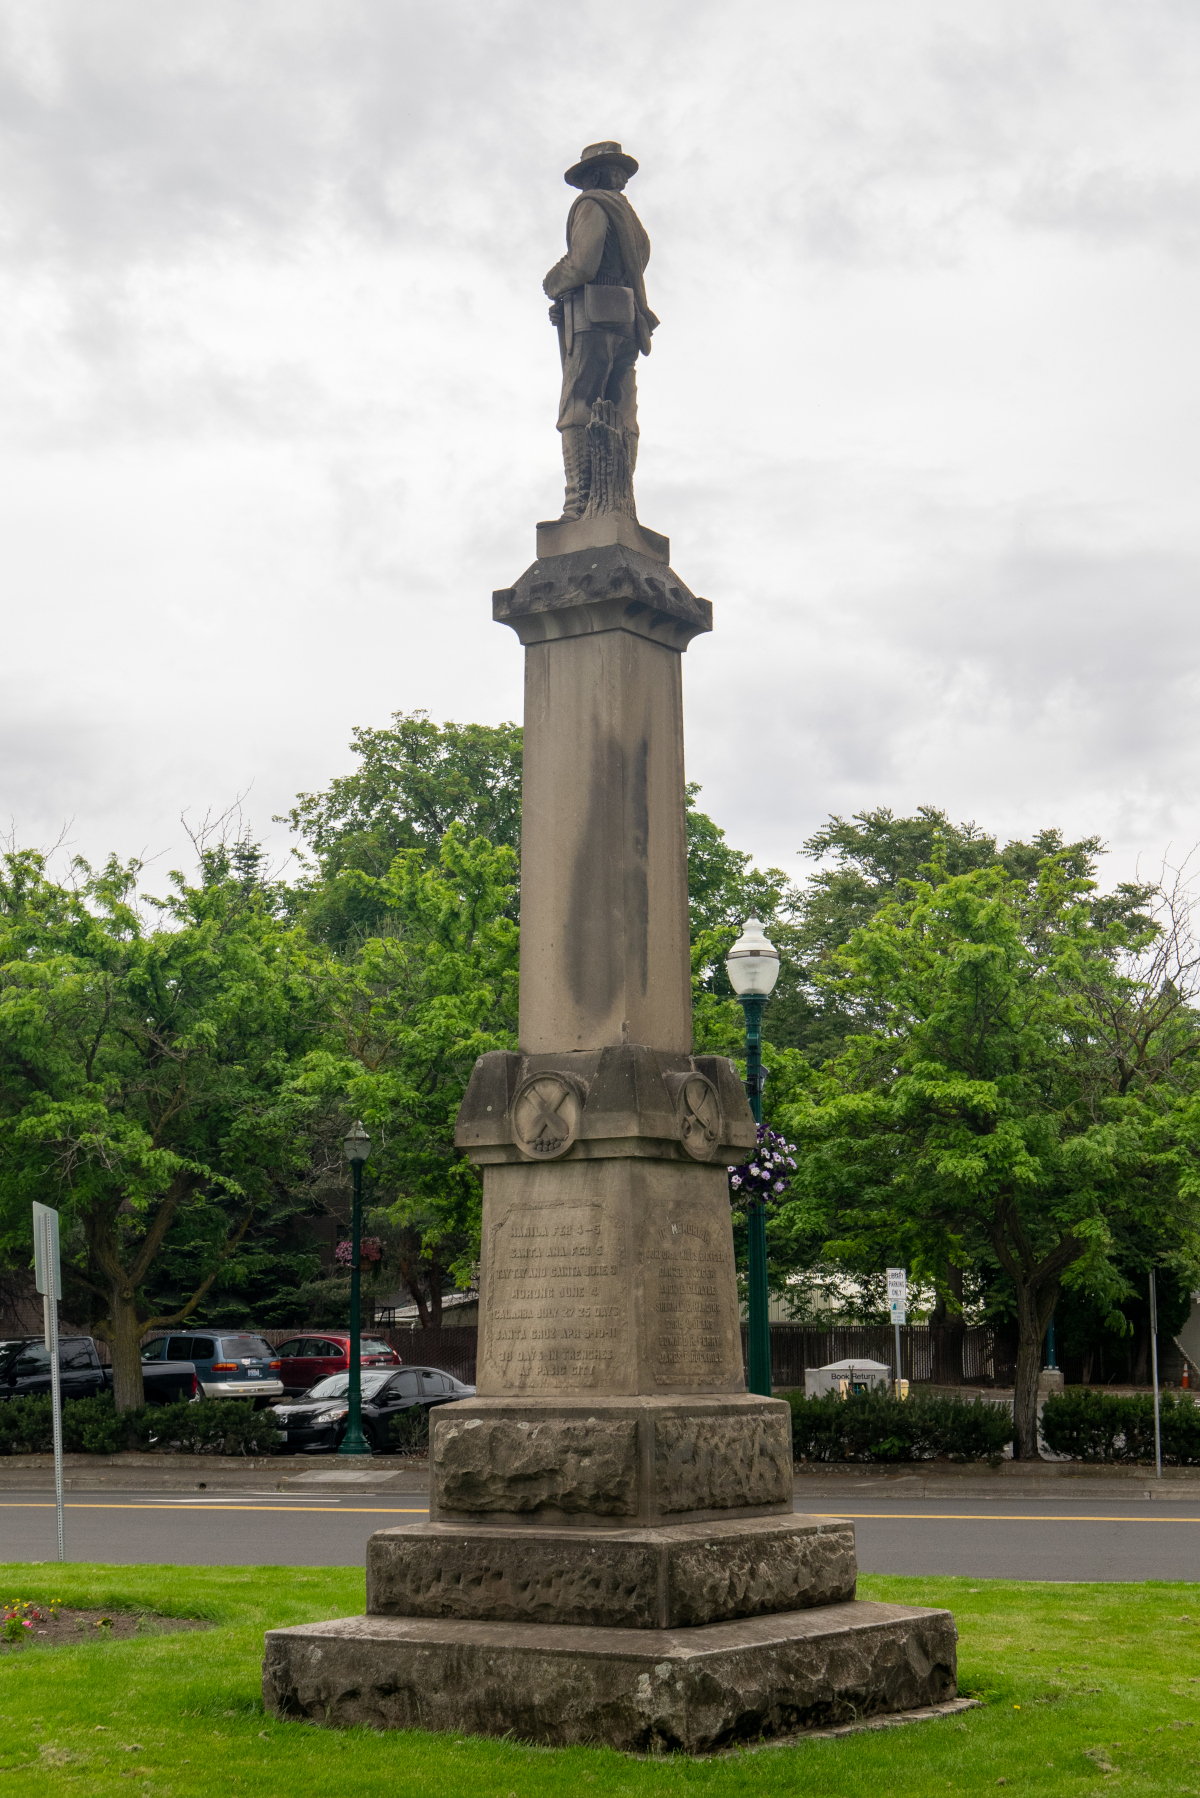 View of the Spanish-American War monument on Alder St. in Walla Walla, Washington.